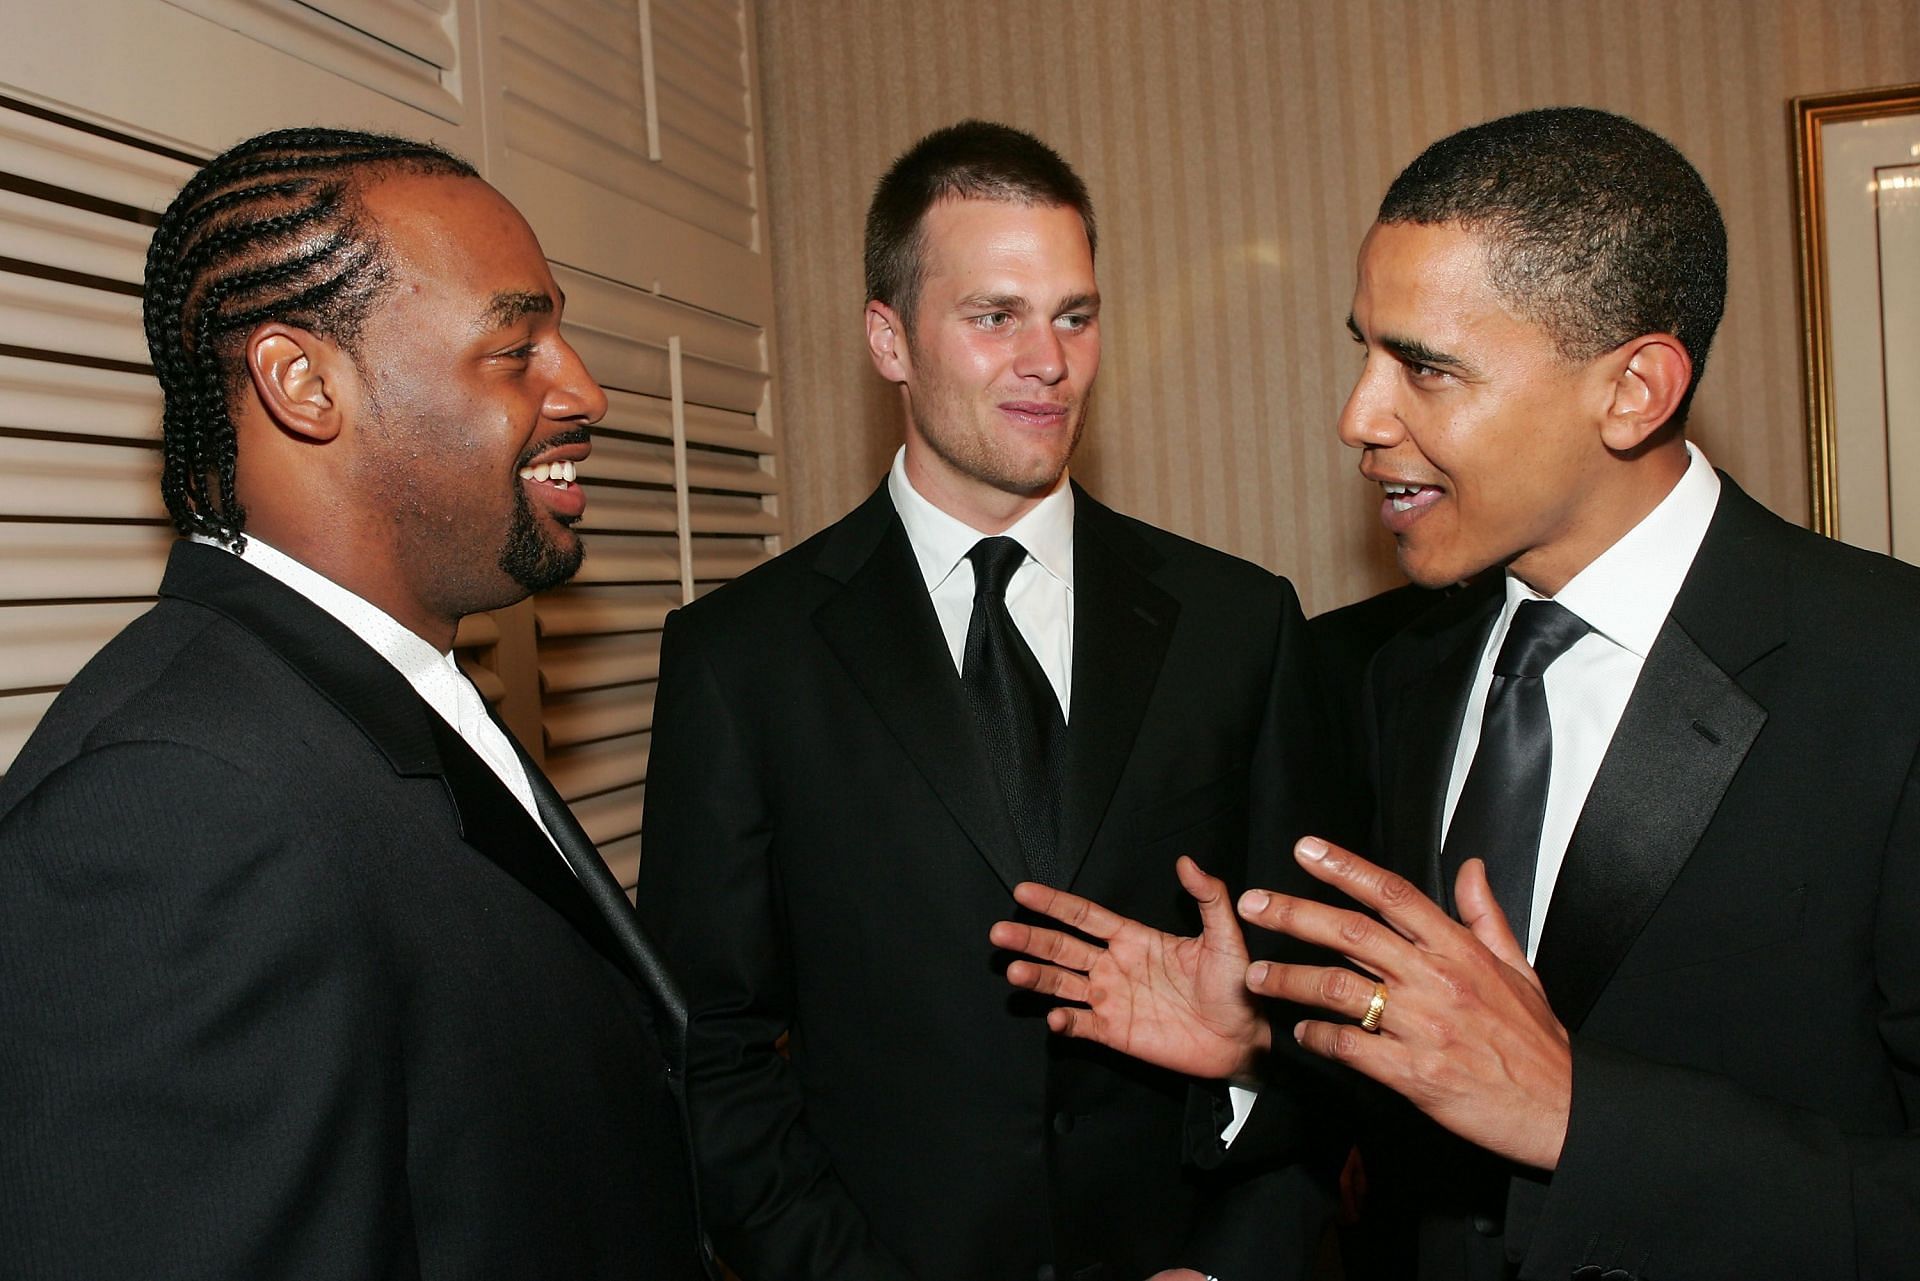 Tom Brady and Barack Obama at White House Correspondents Dinner